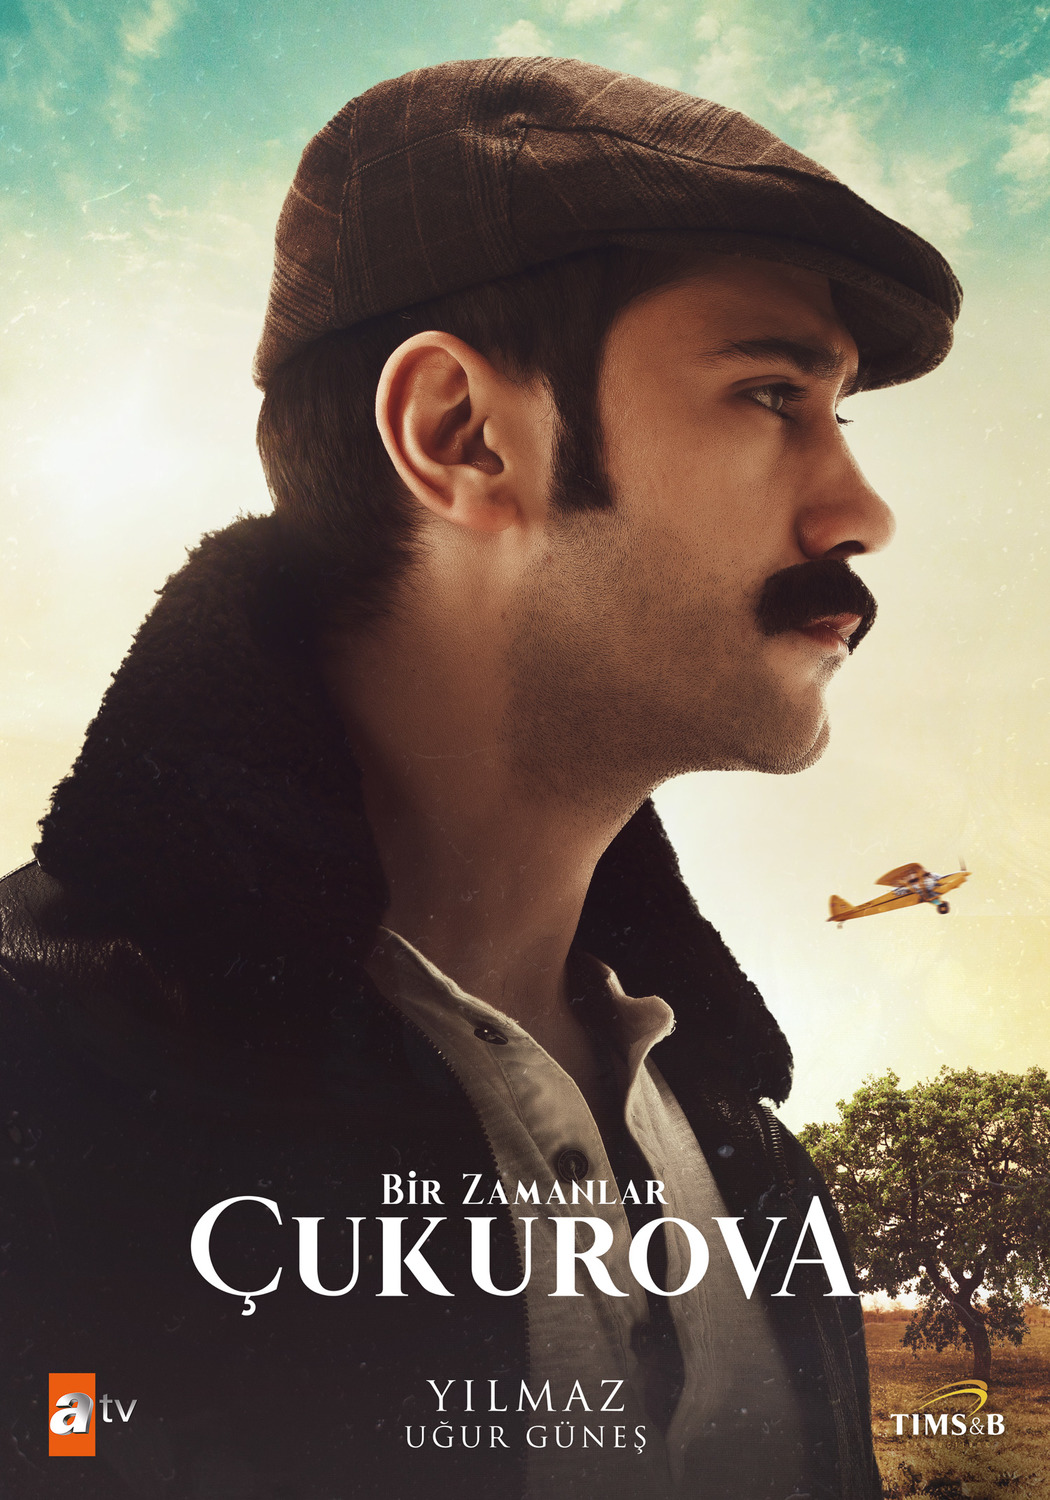 Extra Large TV Poster Image for Bir zamanlar Çukurova (#11 of 12)